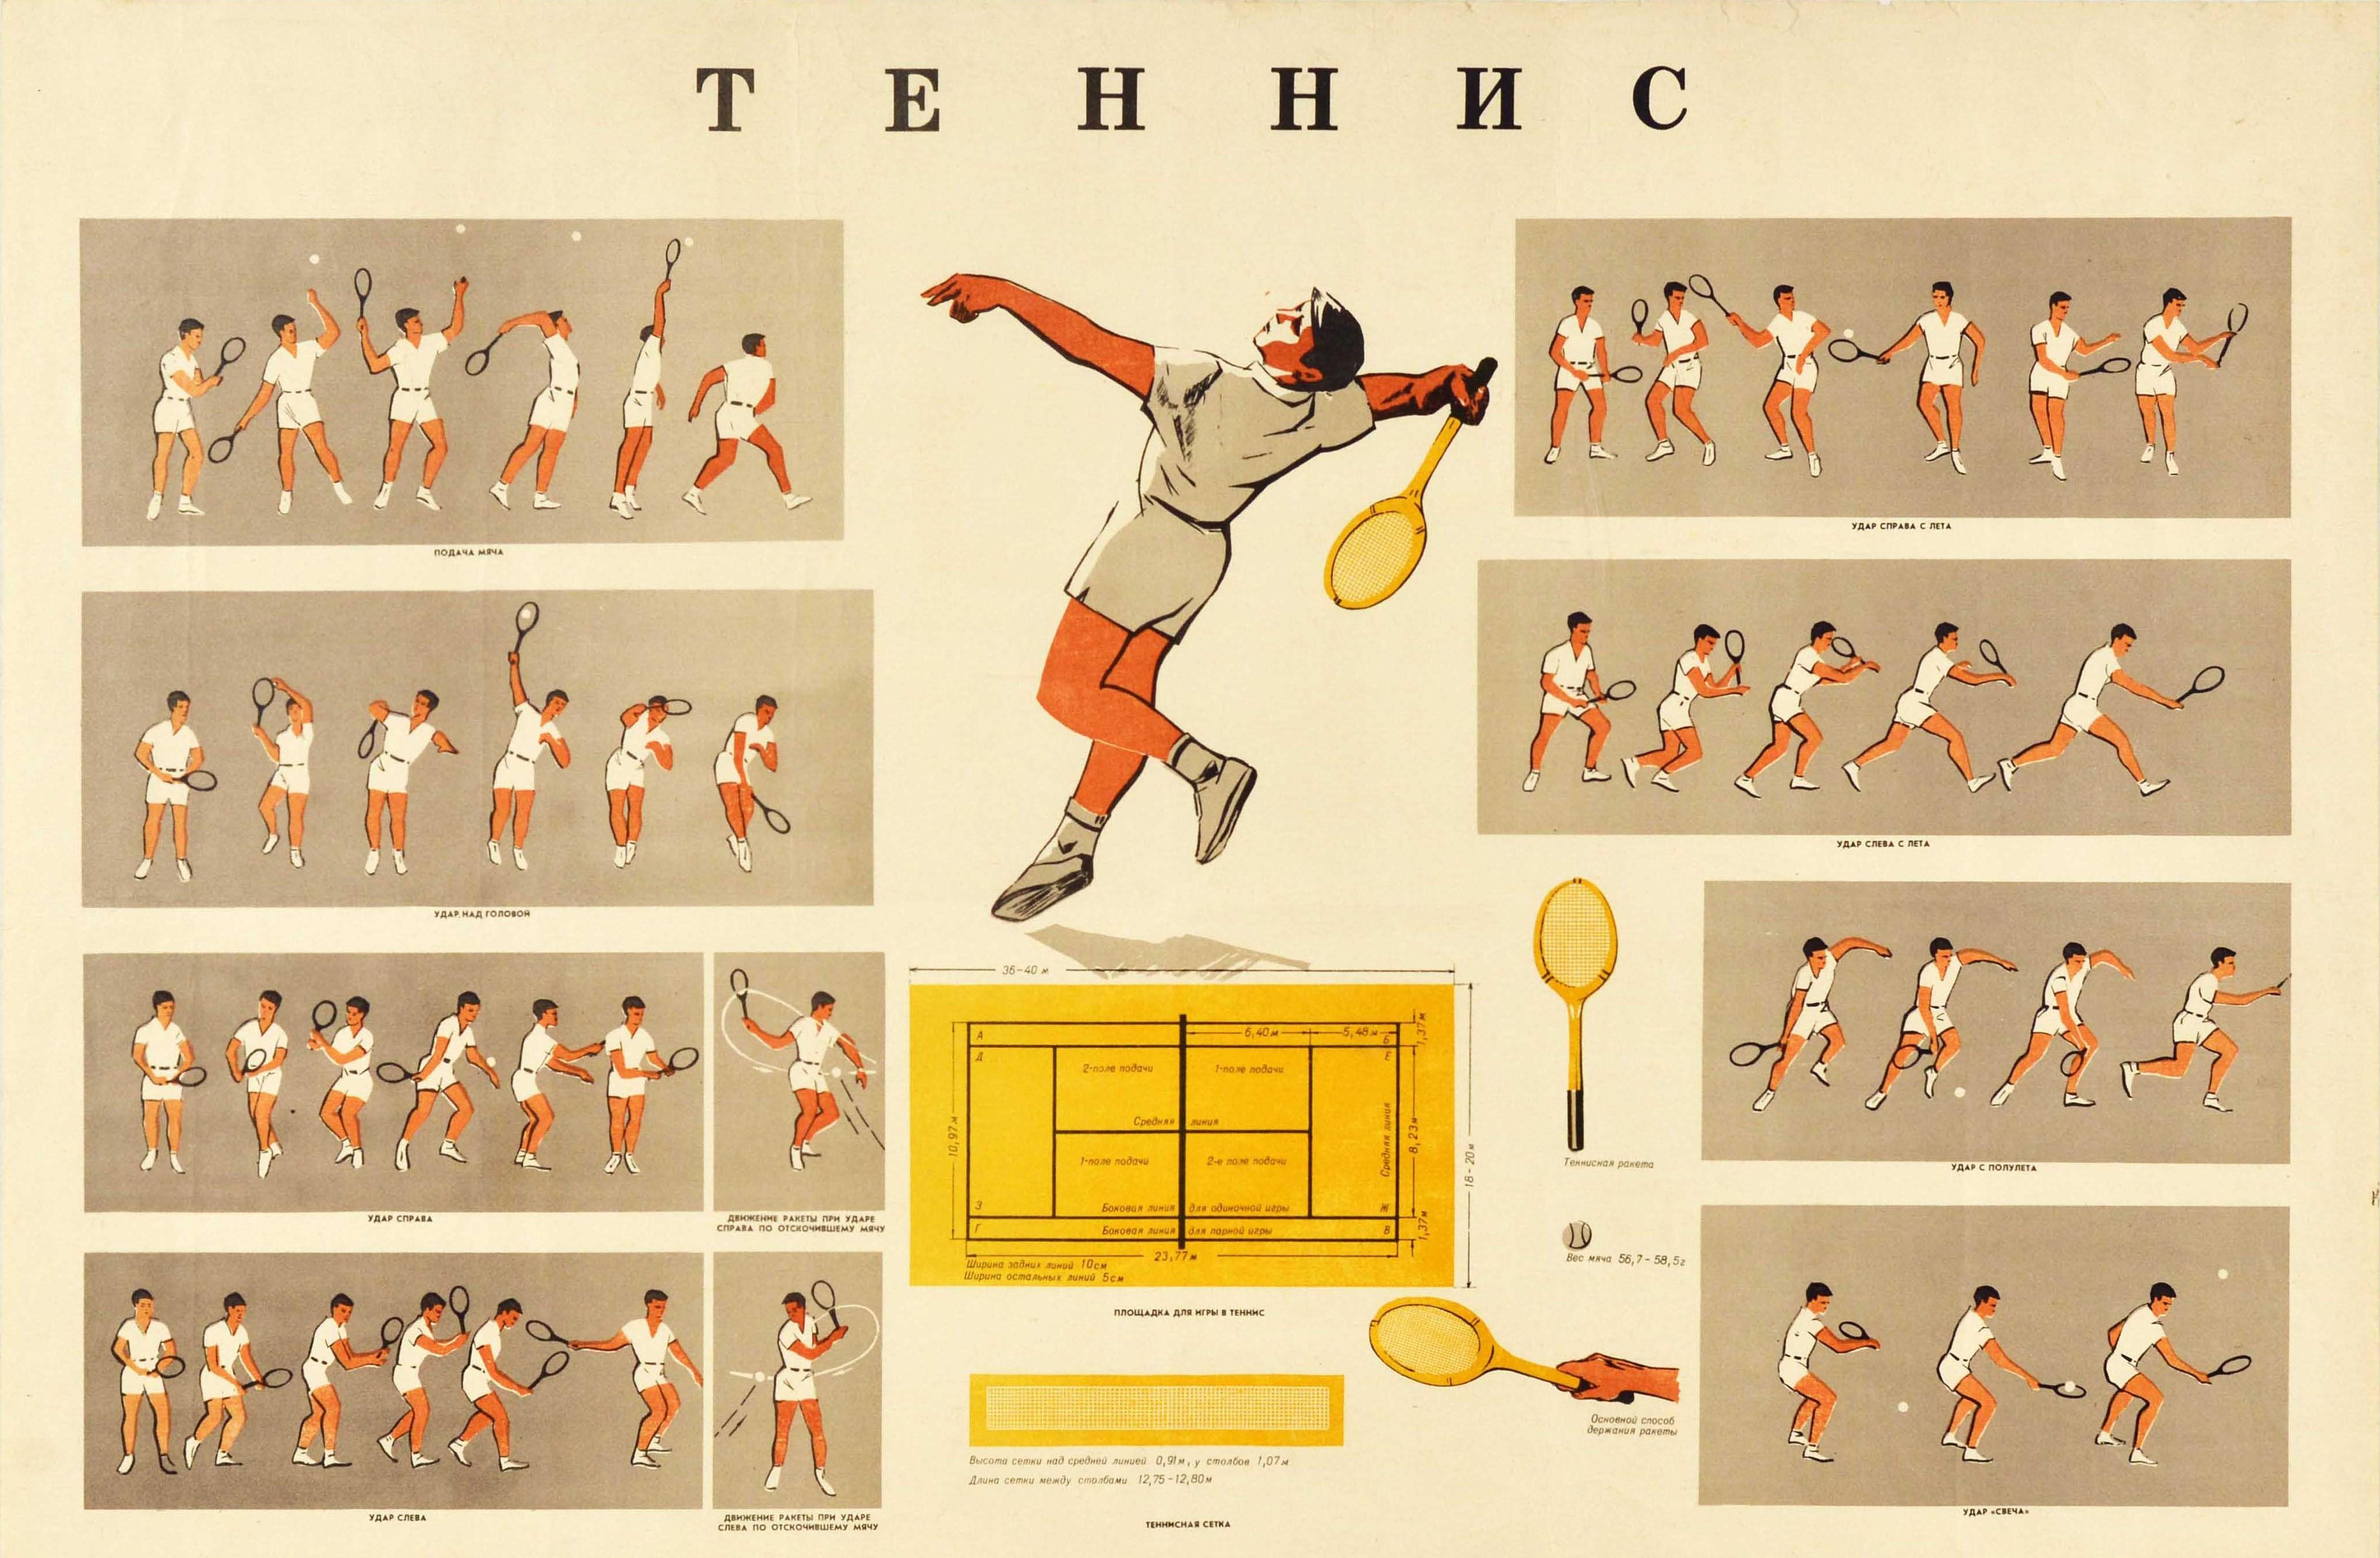 Original Vintage Poster How To Play Tennis Match Equipment Illustrated Sport Art - Print by Lyubonko